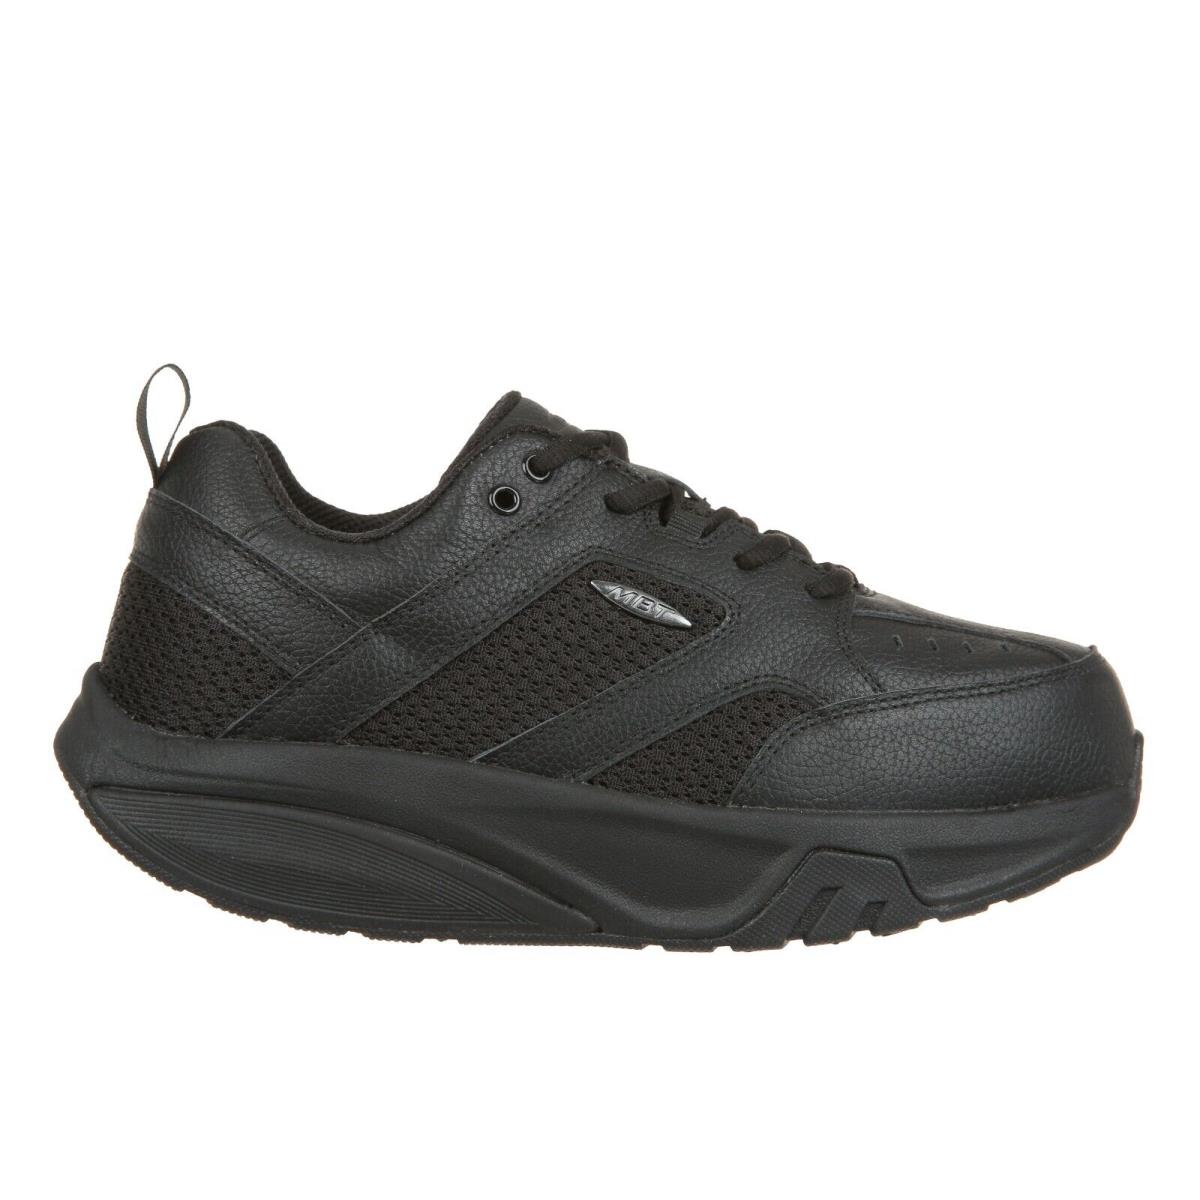 Mbt Anataka DX 3 Men Walking Shoe Max Support Leather Upper Black Col - Black